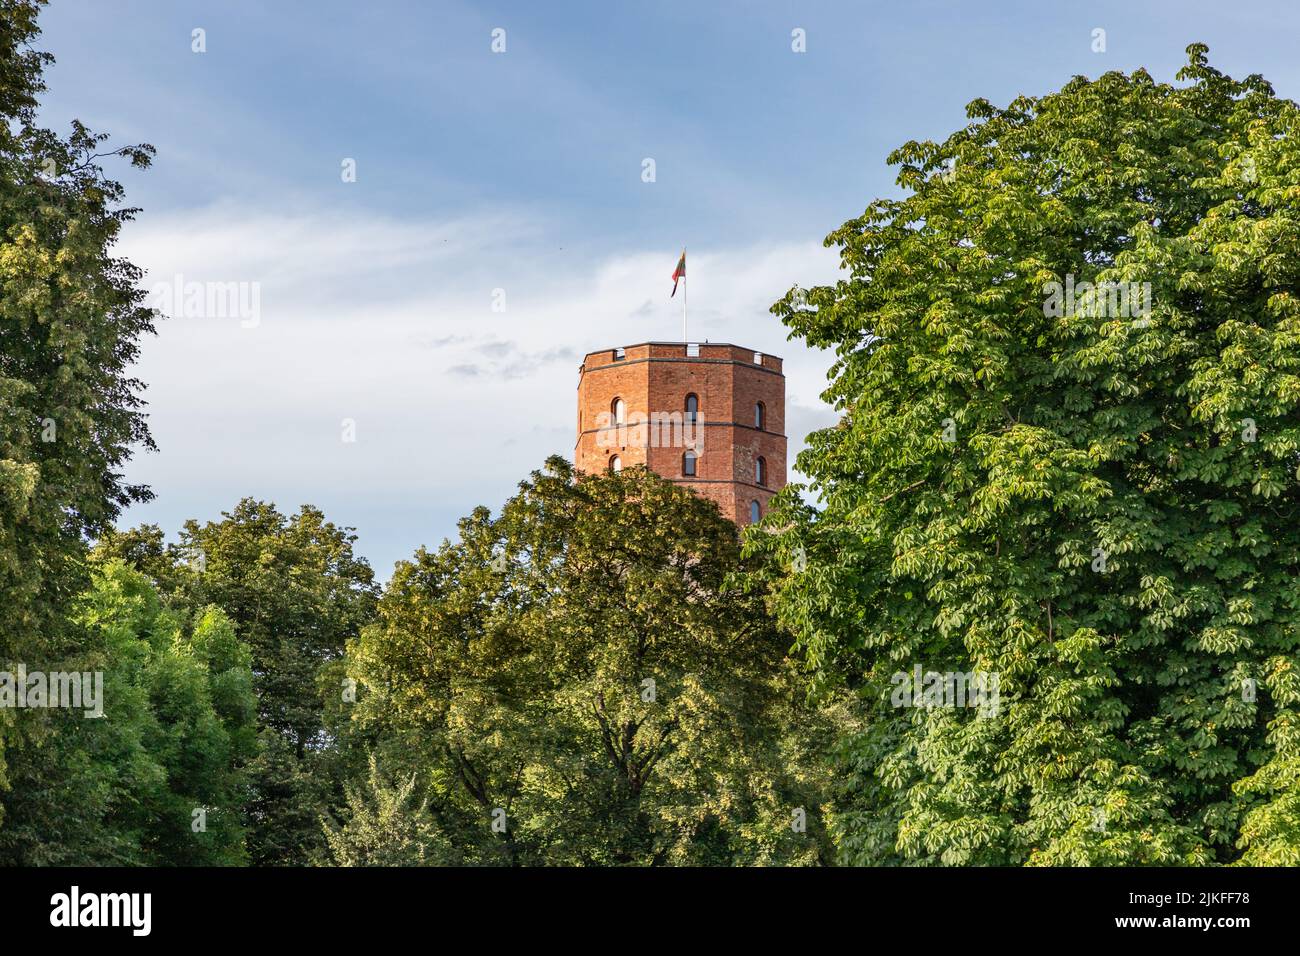 The capital of Lithuania - Vilnius Stock Photo